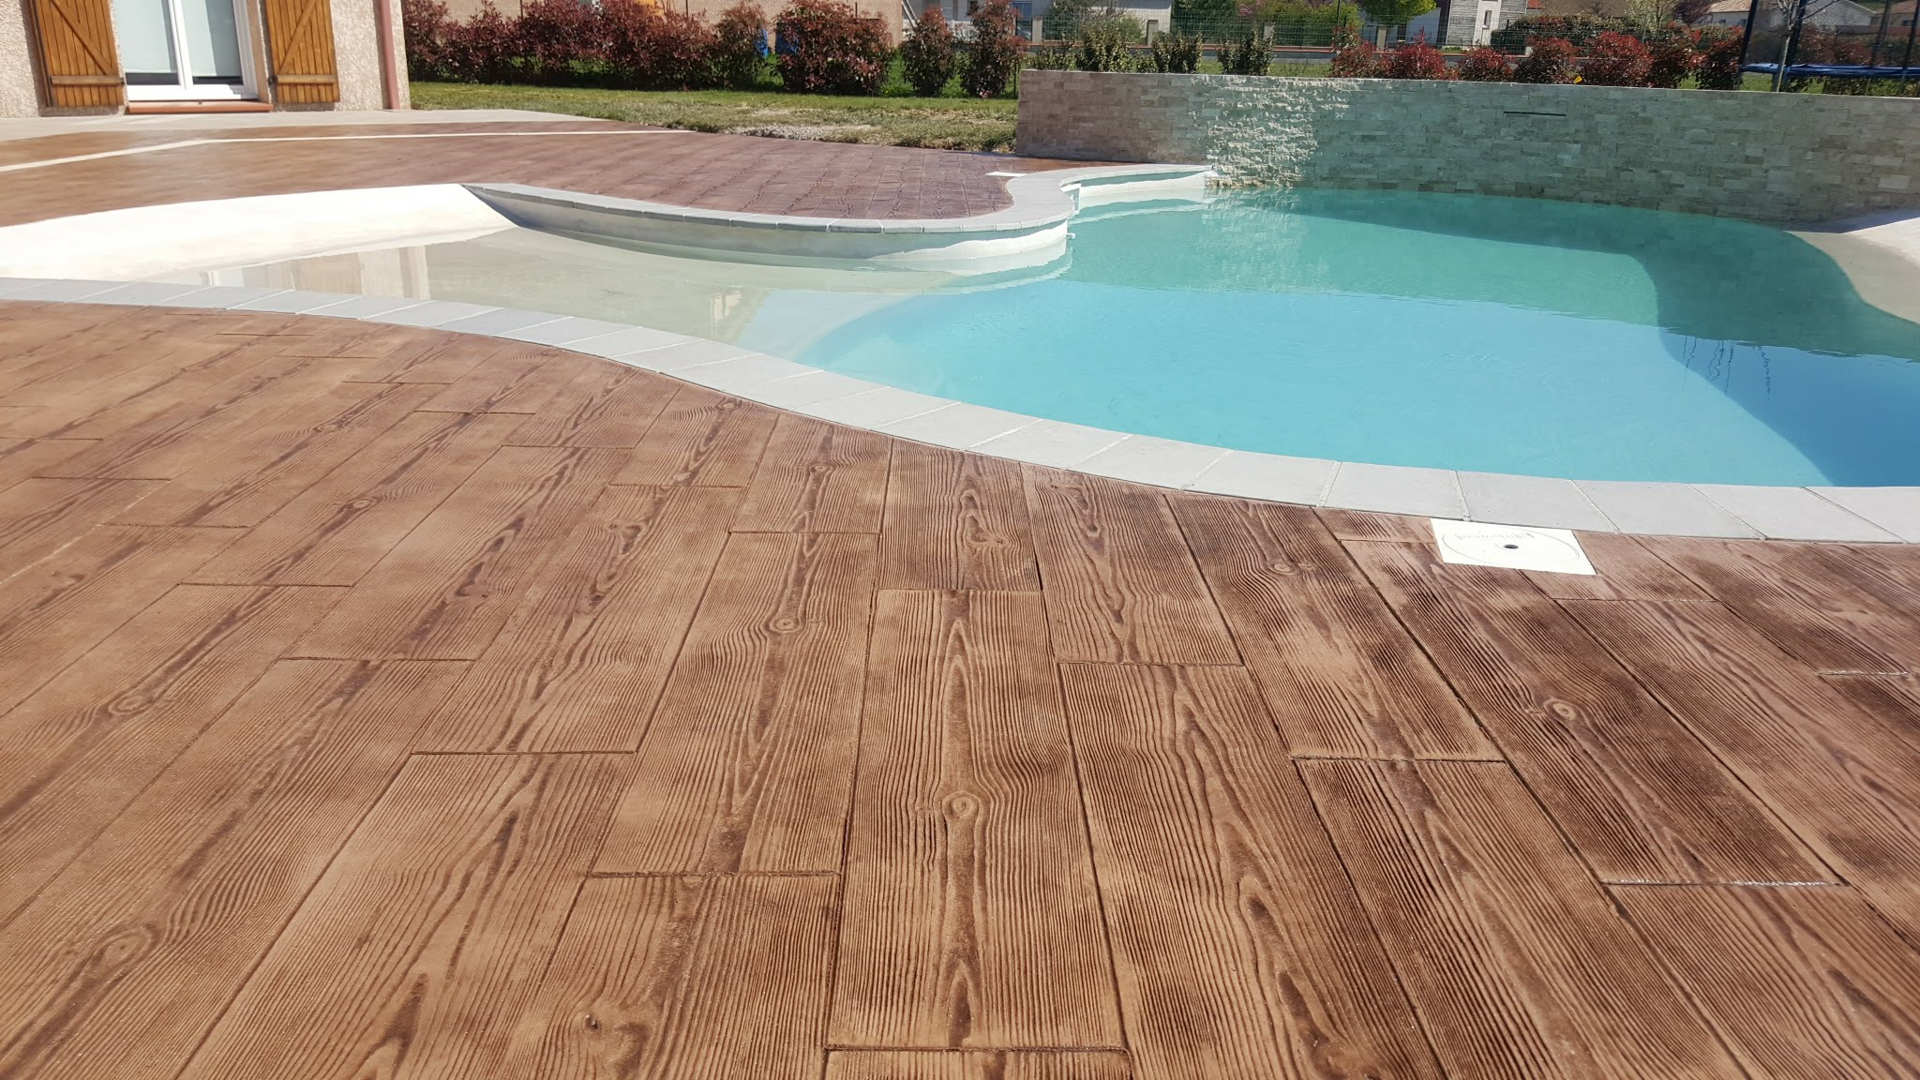 Imprinted concrete imitation wood on the ground around the pool